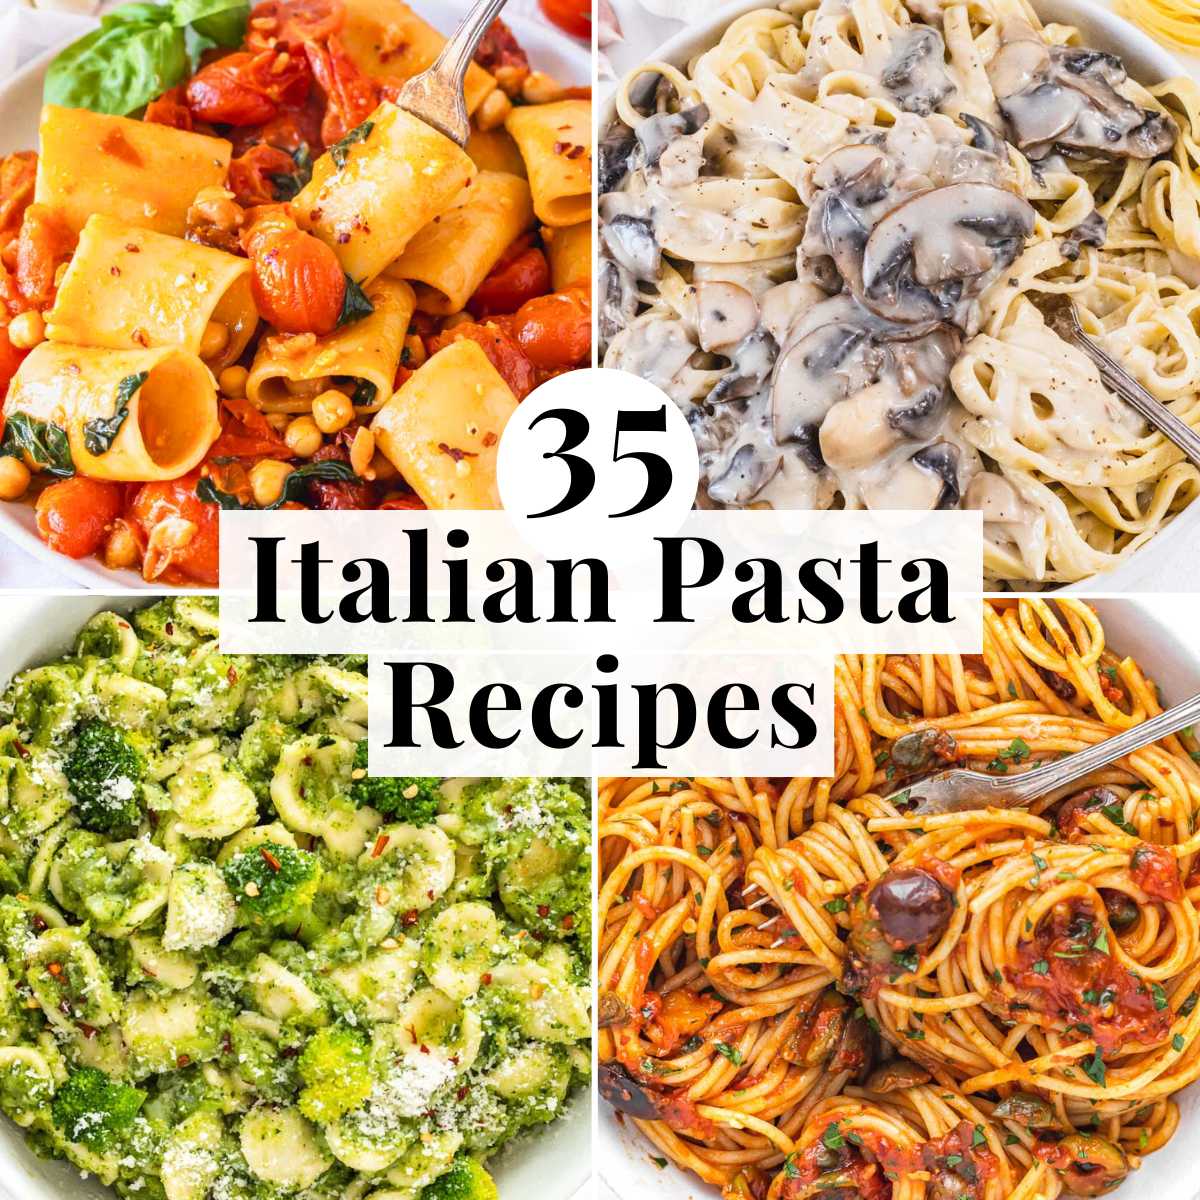 Italian pasta recipes with quick dinner ideas